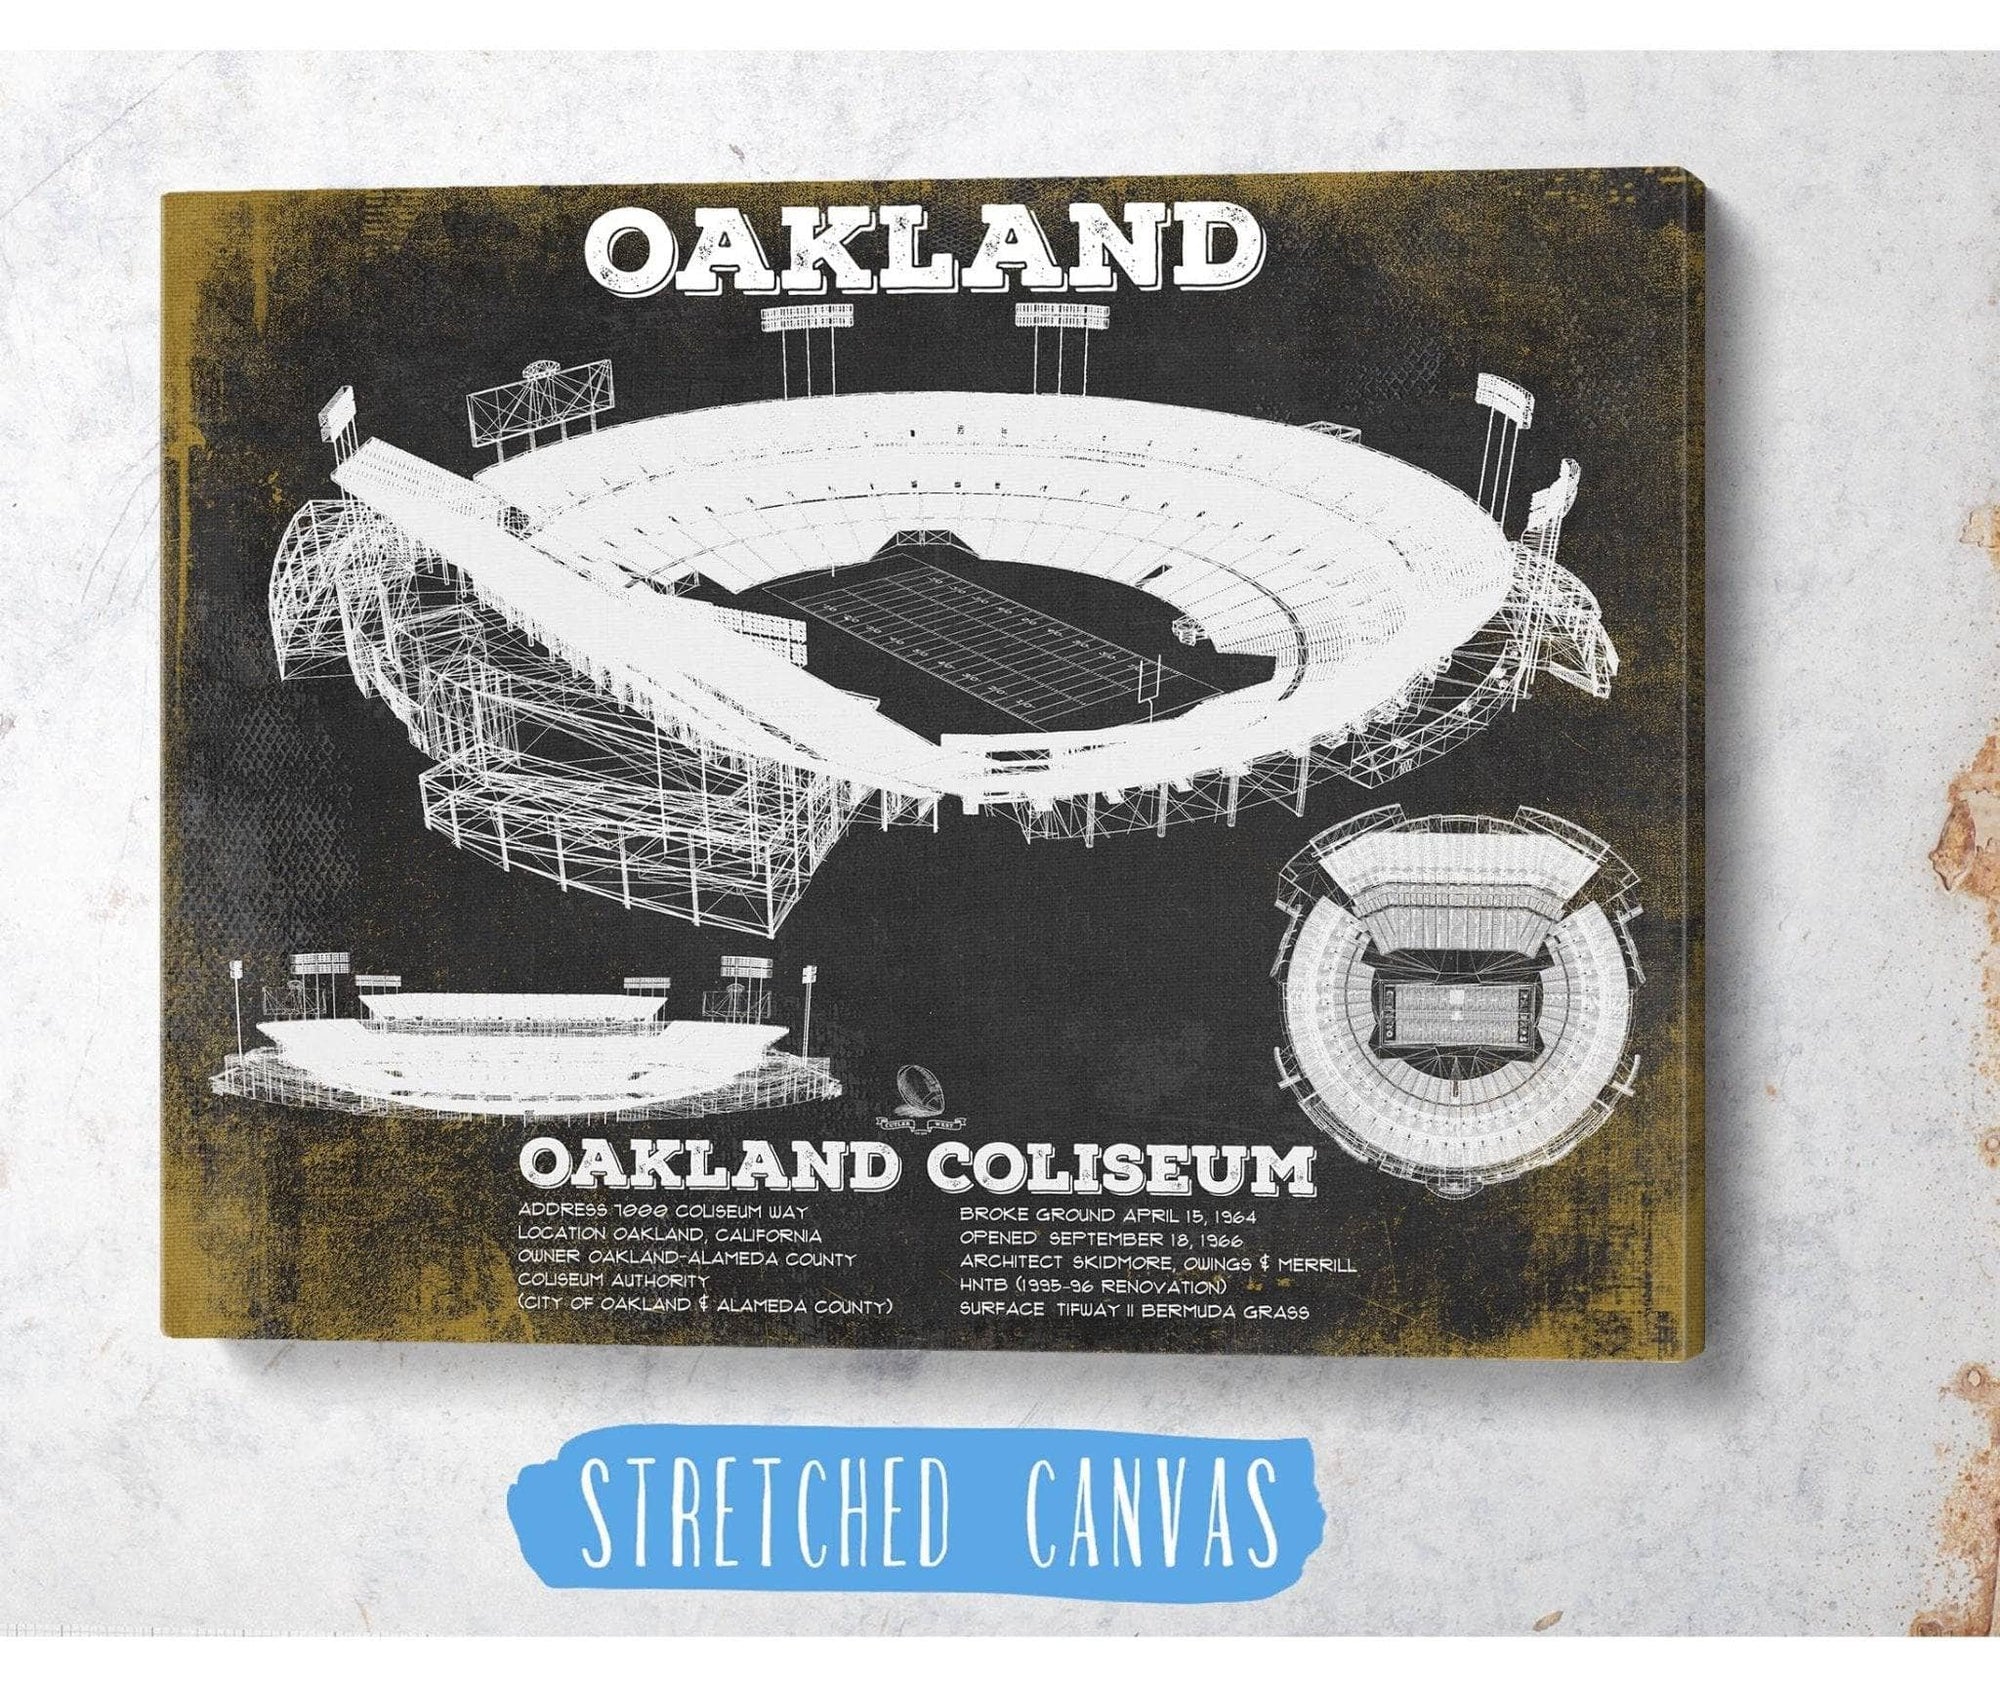 Cutler West Pro Football Collection Oakland Raiders Team Colors Oakland Coliseum NFL Vintage Football Print